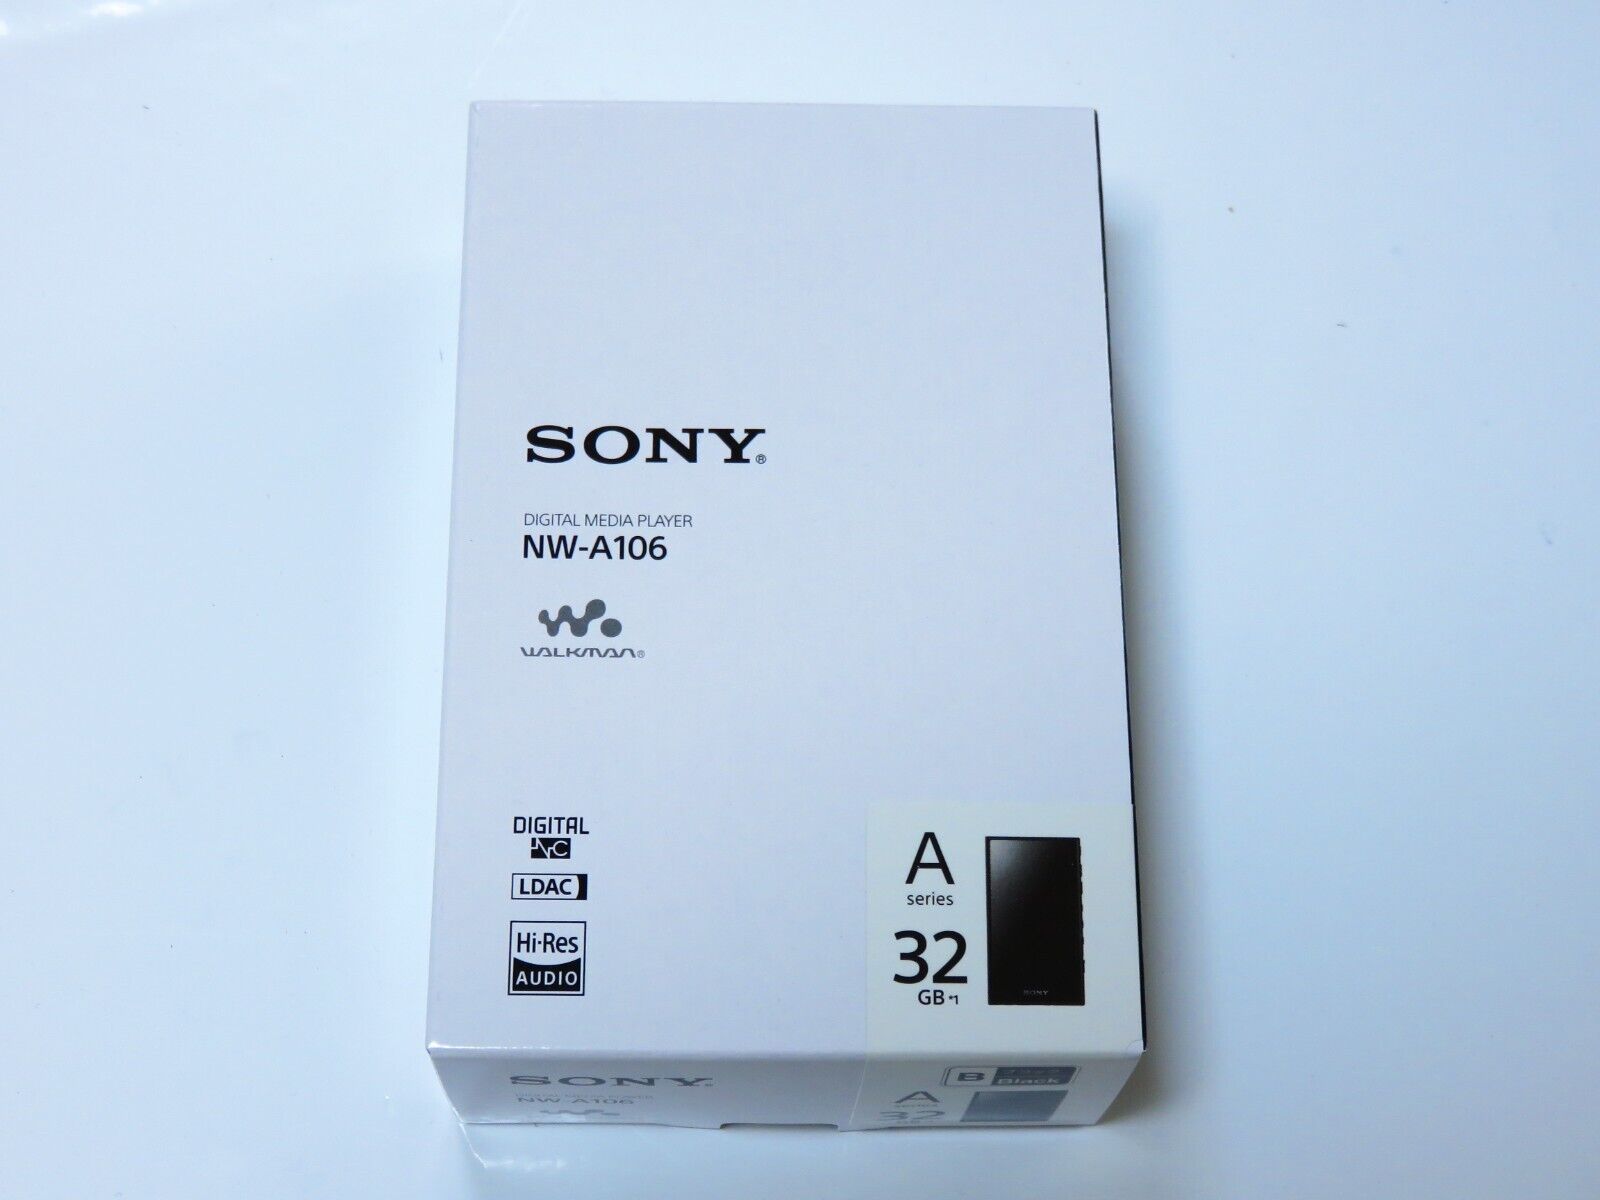 SONY Walkman 32GB A Series NW-A106 B Black New in Box | eBay